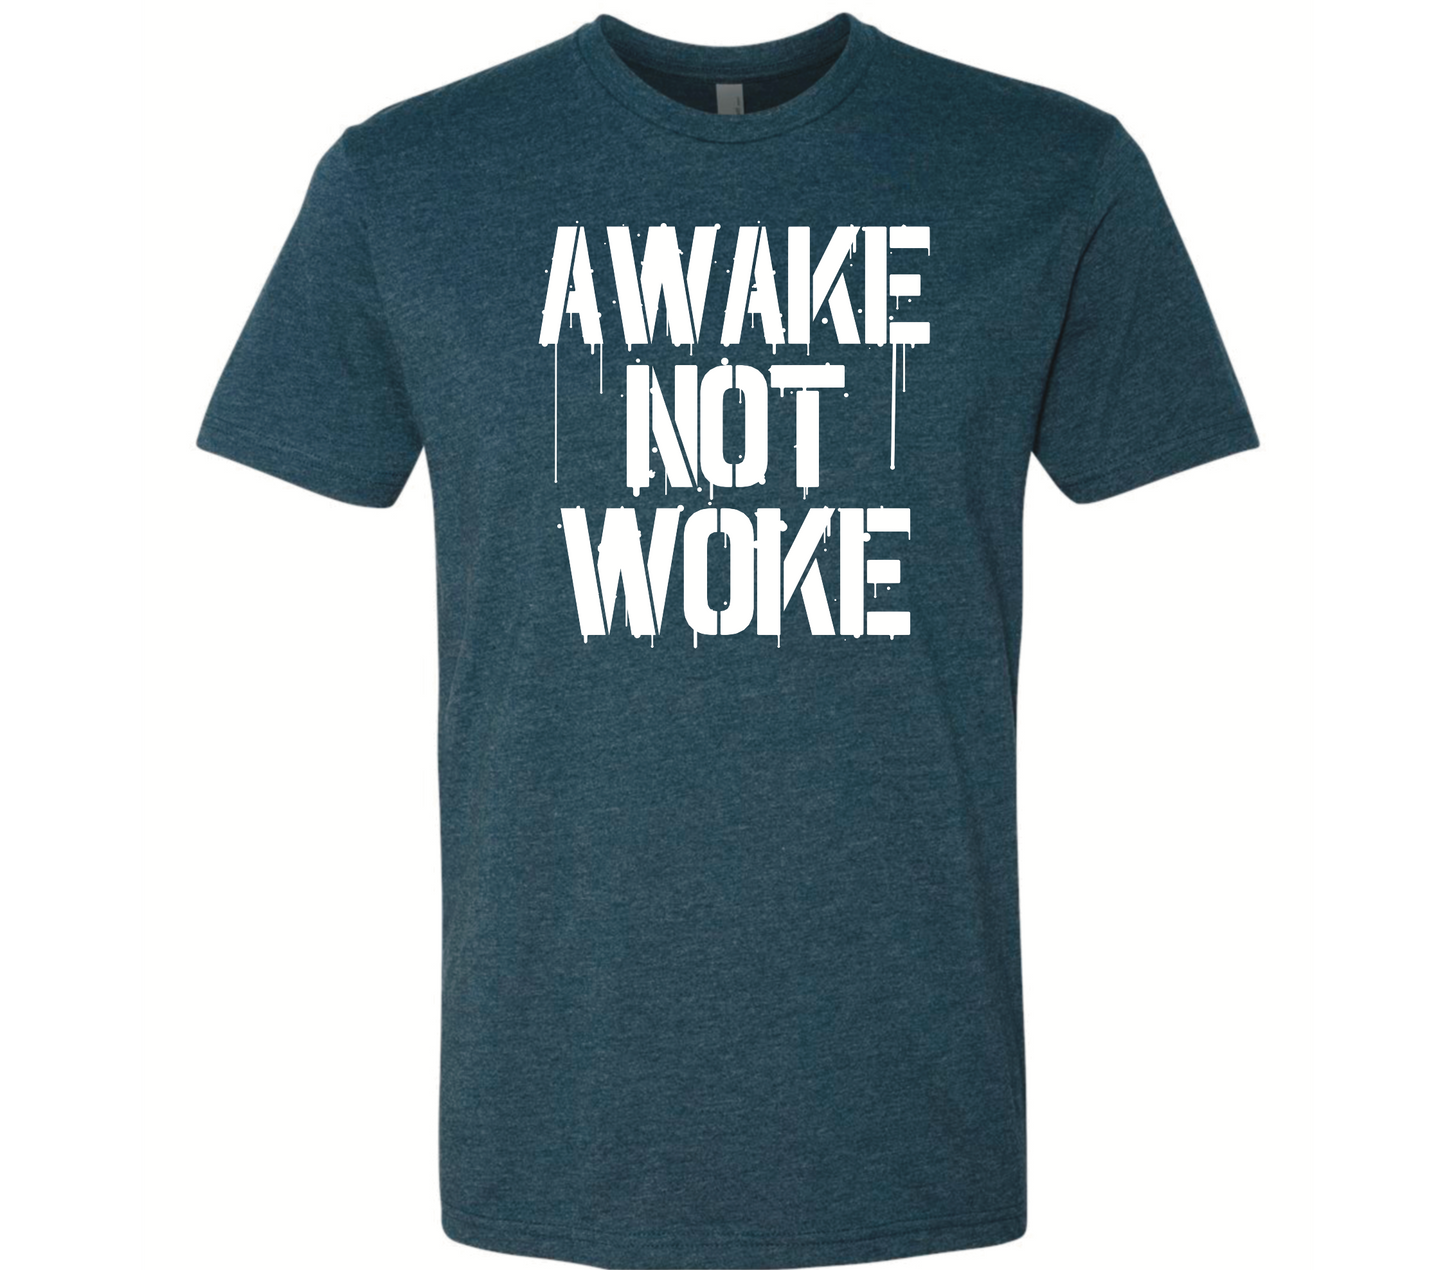 Awake not woke